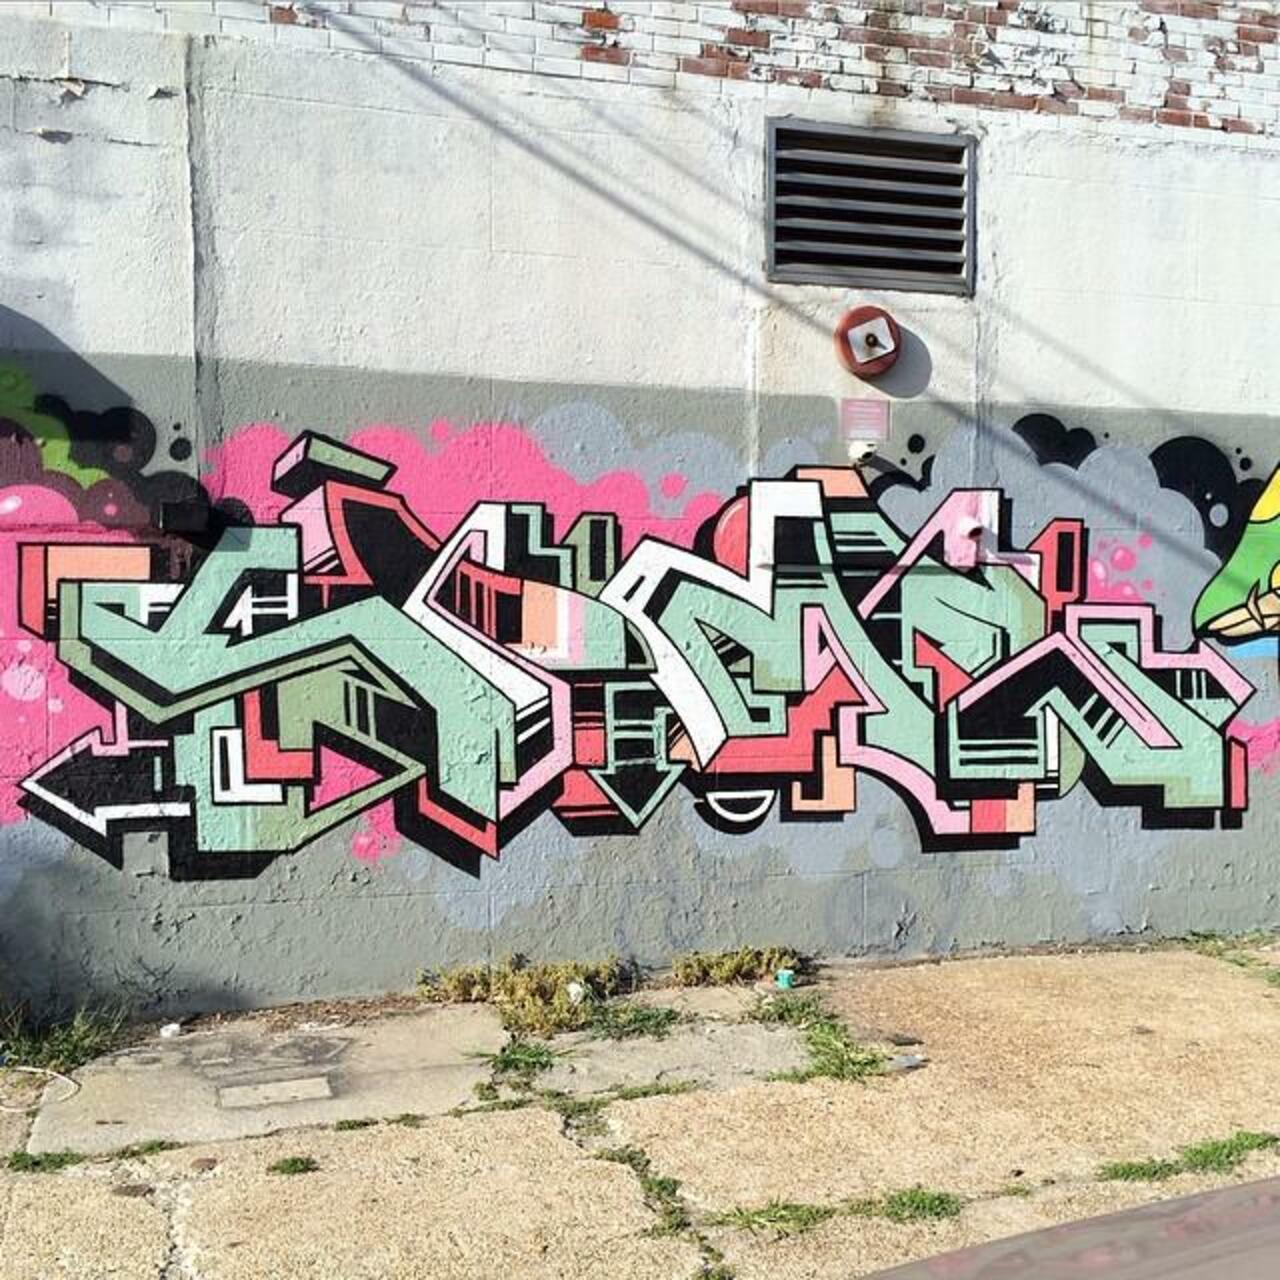 RT @artpushr: via #tbm_zoo "http://ift.tt/1FFUKJY" #graffiti #streetart http://t.co/07pb1yTHJ3